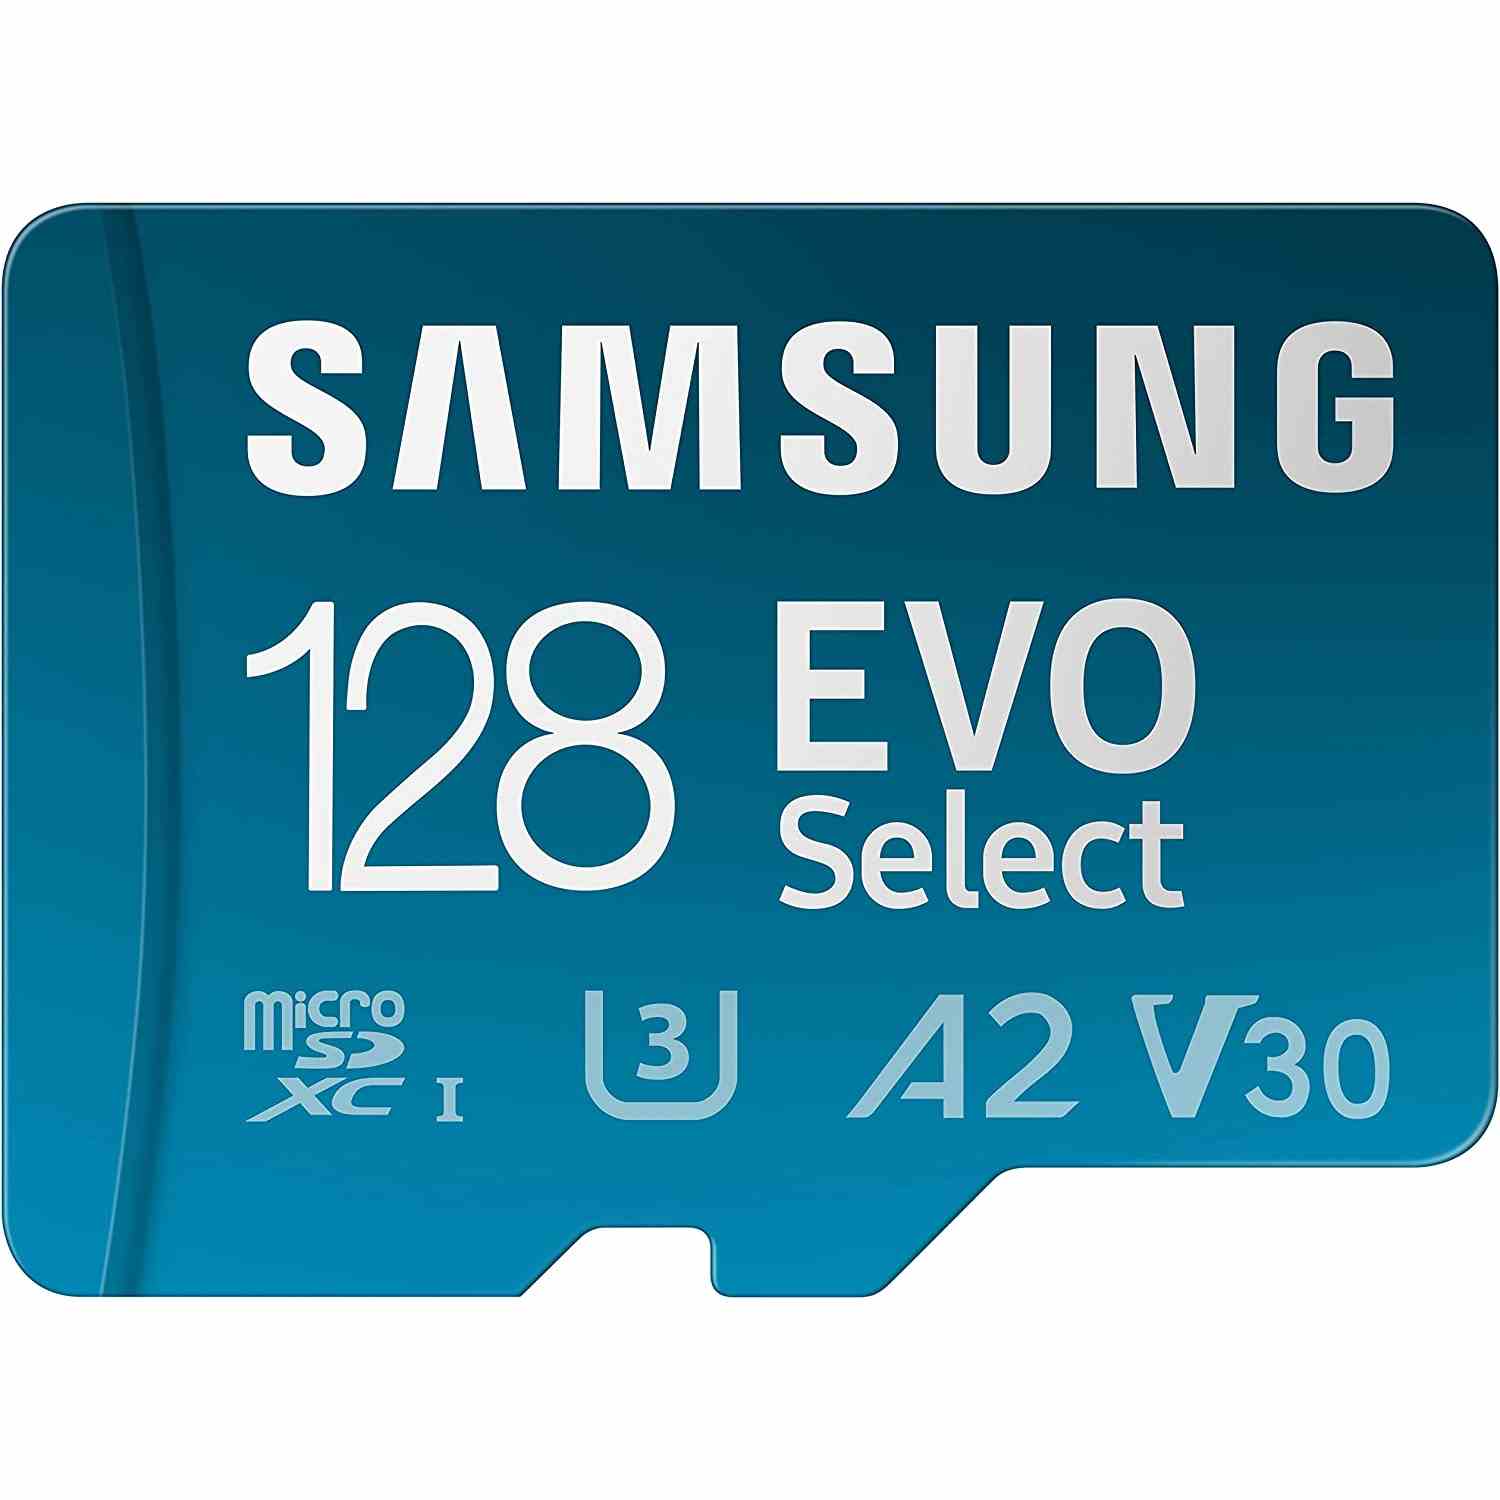 Samsung Evo Select (128 Go)